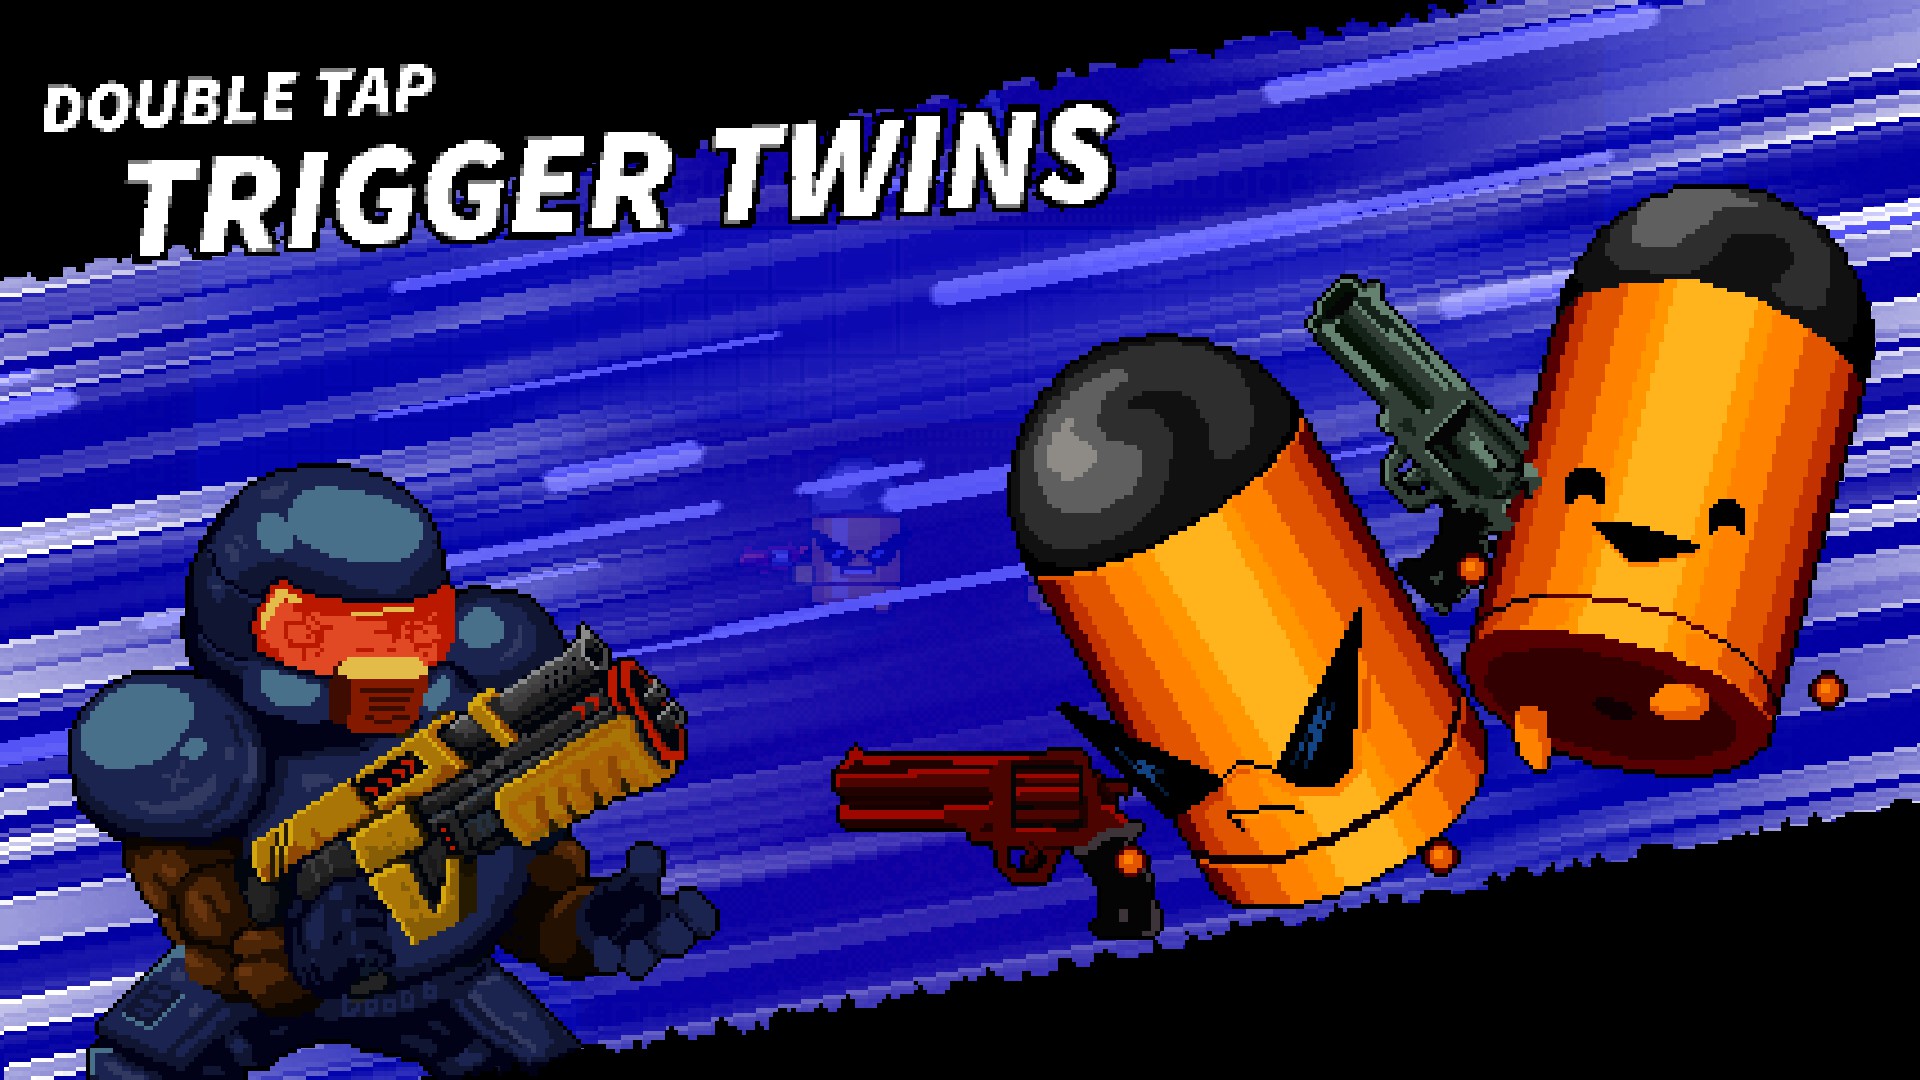 Enter The Gungeon Steam Software Bullet Marines Gun Happy Sunglasses Angry Combat Twins Pixel Art Pi 1920x1080